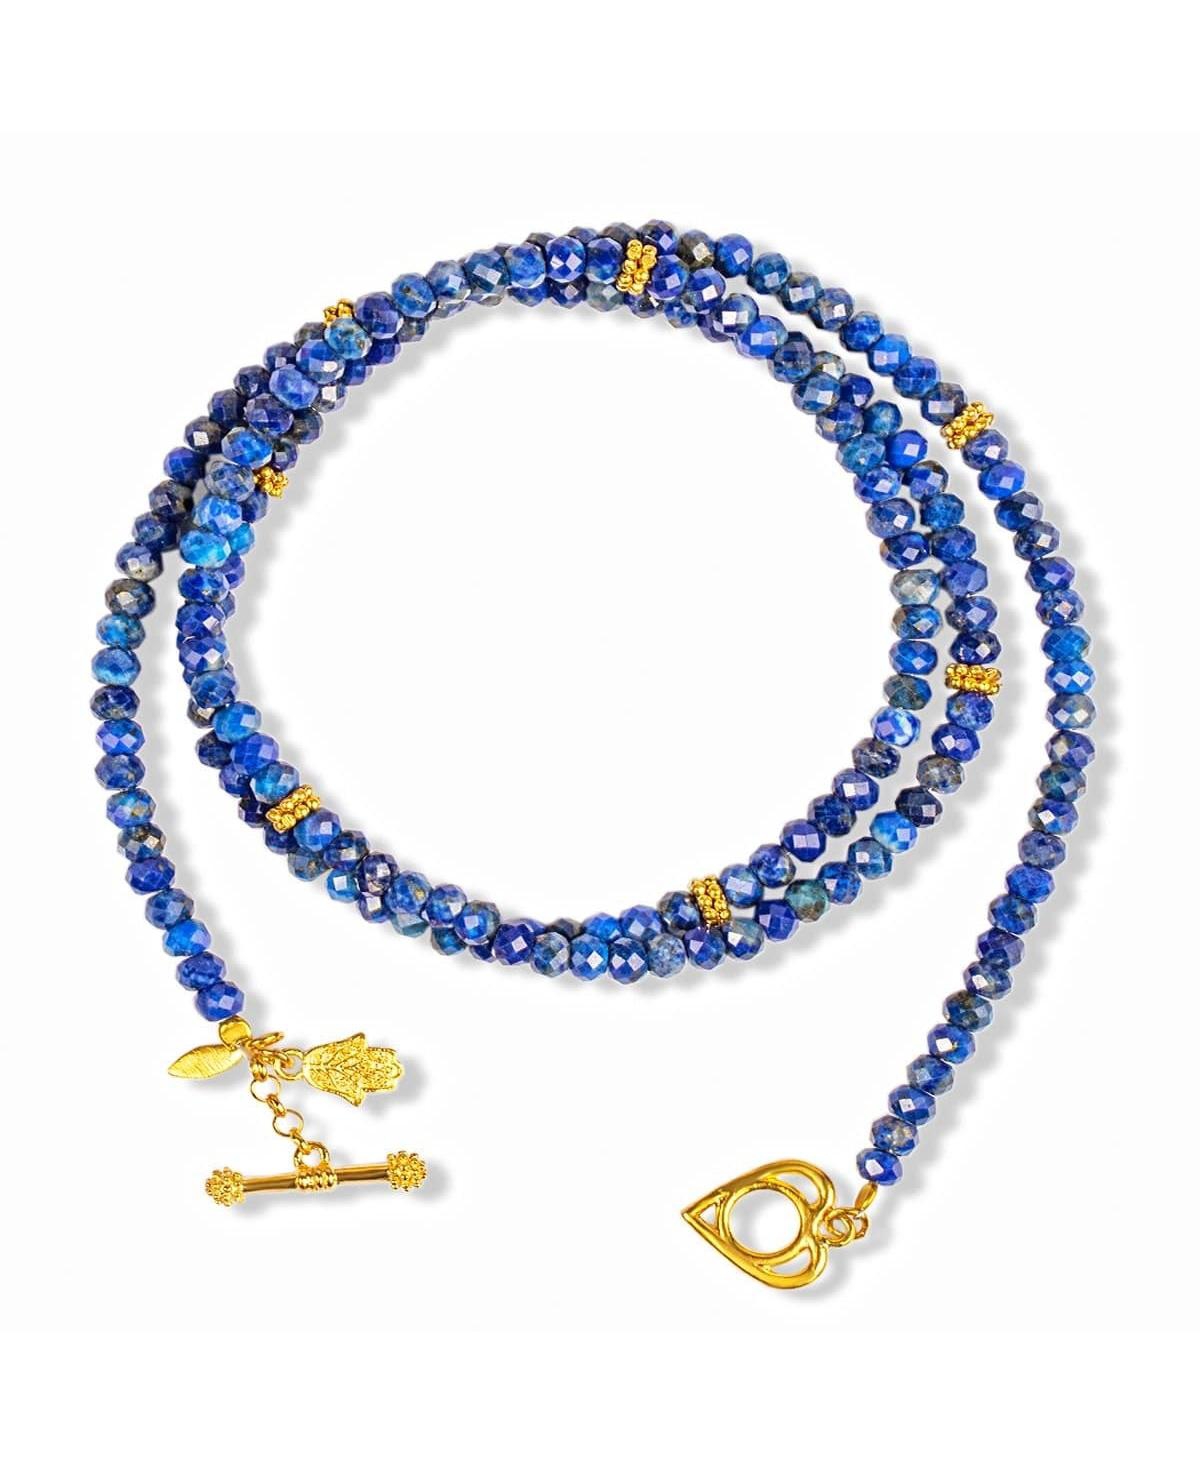 Peaceful Heart Lapis Lazuli Wrap Bracelet - Blue/gold